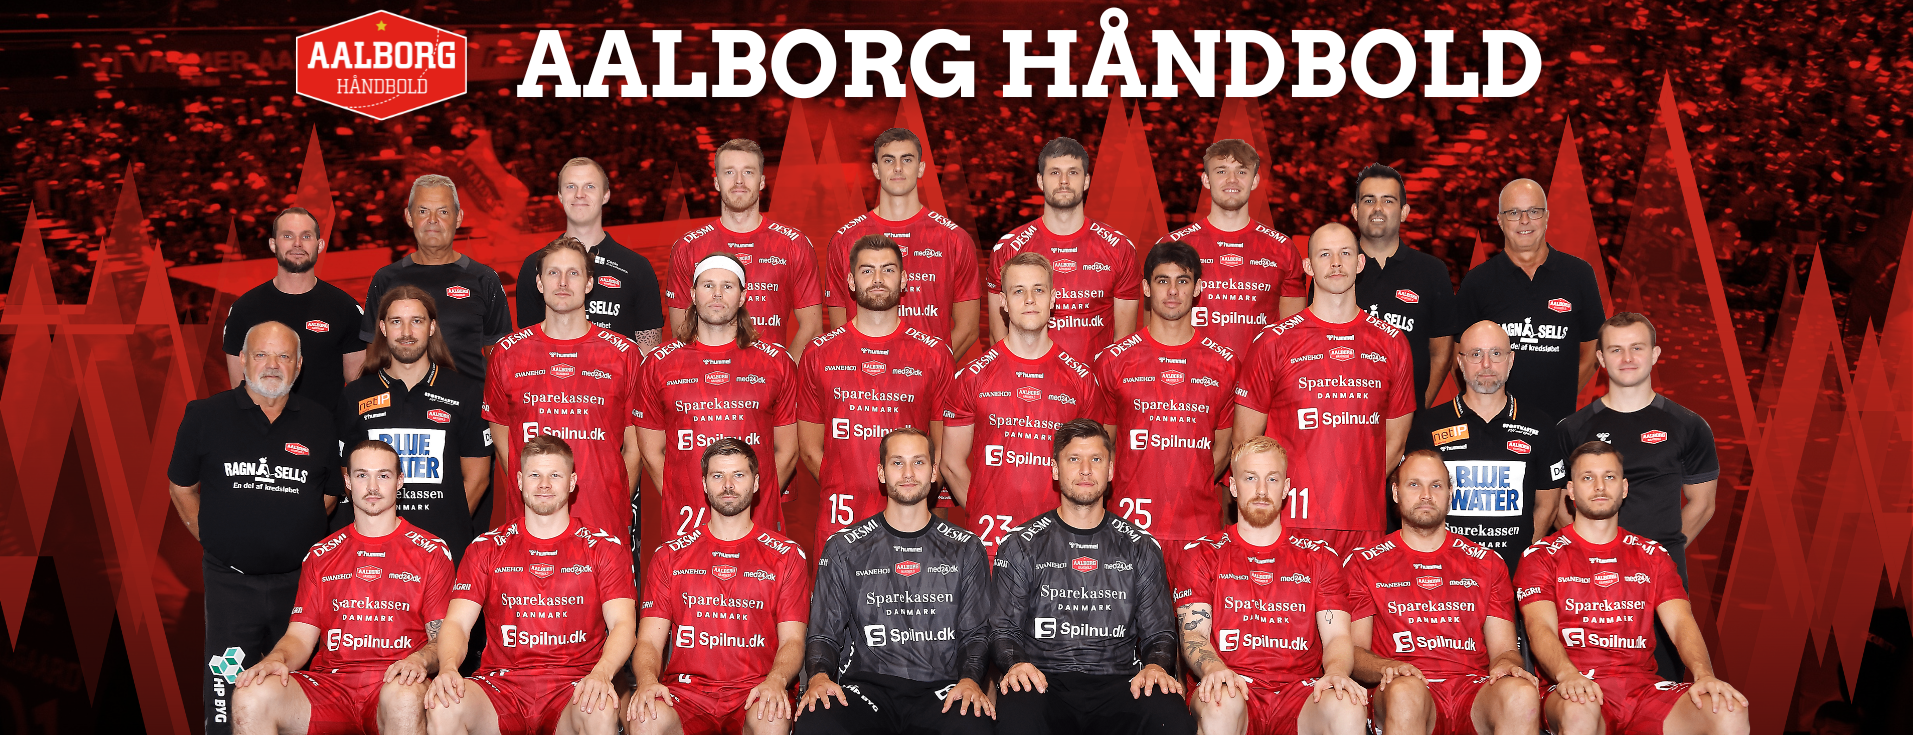 aalborg handball live